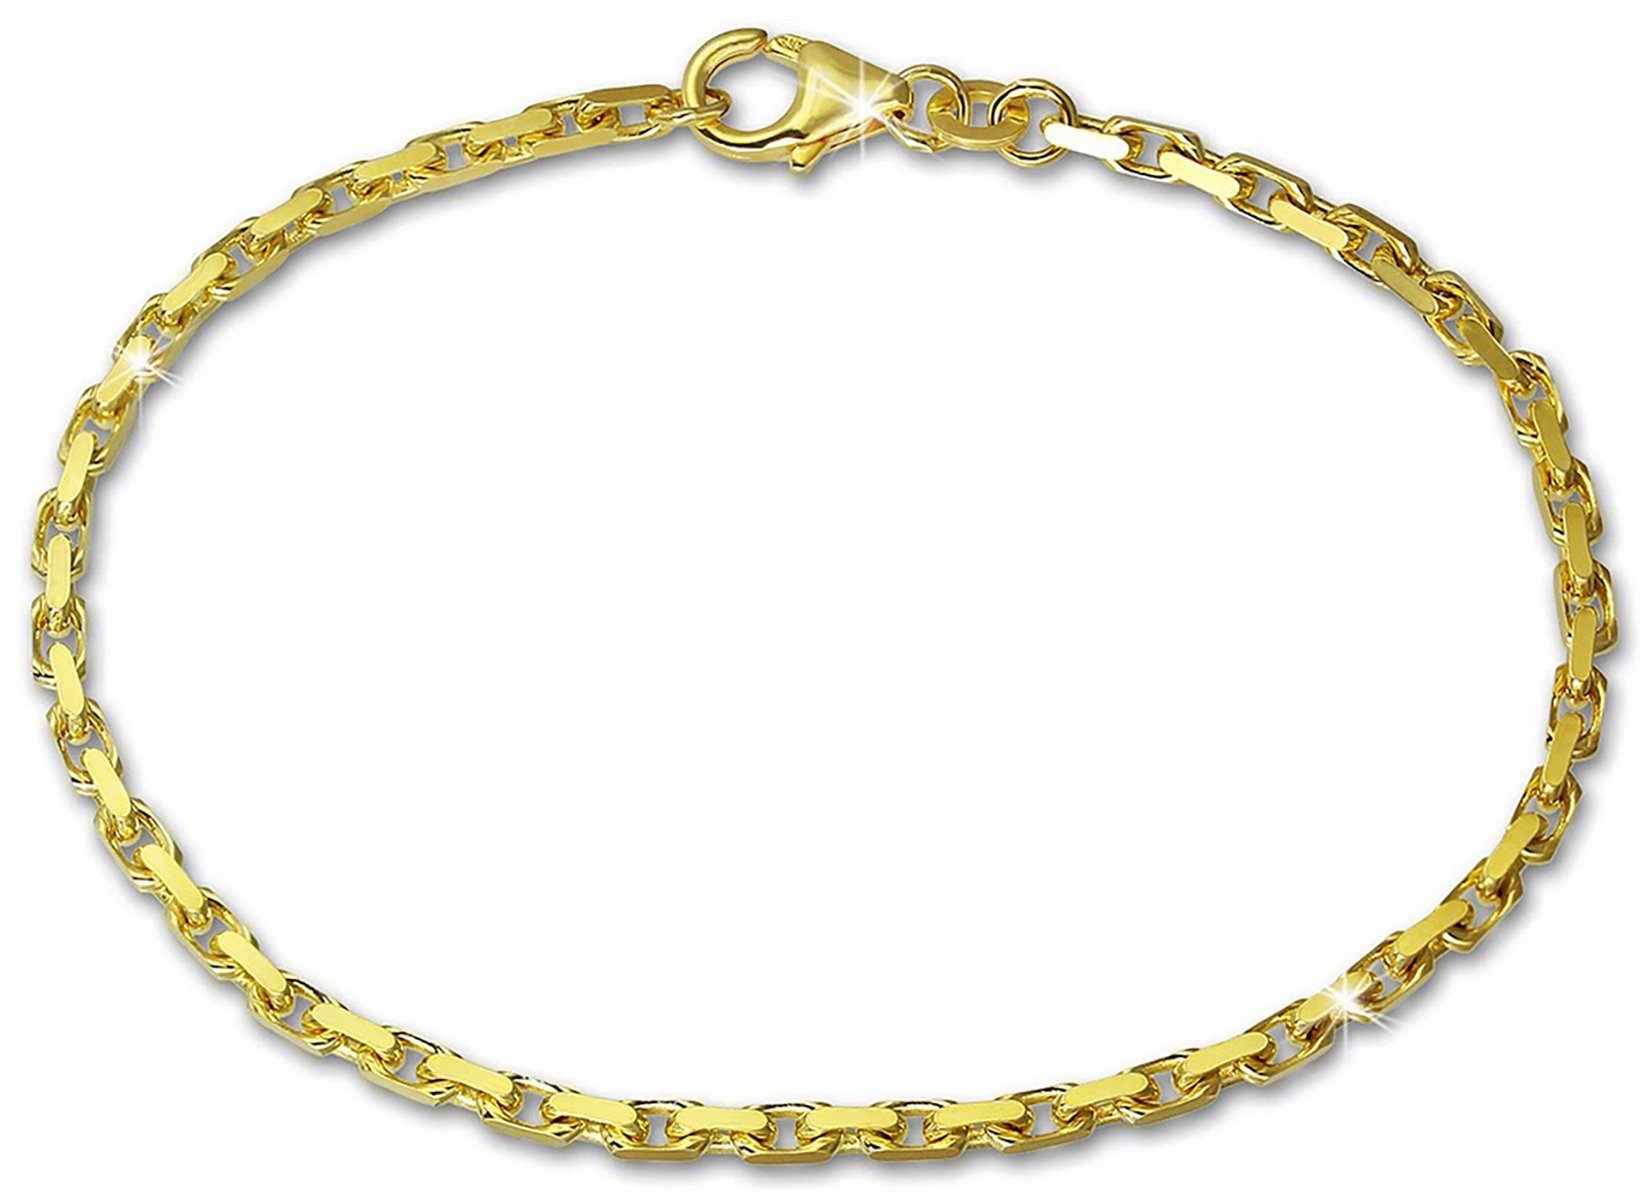 GoldDream Goldarmband GoldDream 18,5cm Armband Anker (Armband), Damen Armband (Anker) ca. 18,5cm, 333 Gelbgold - 8 Karat, Farbe: gold